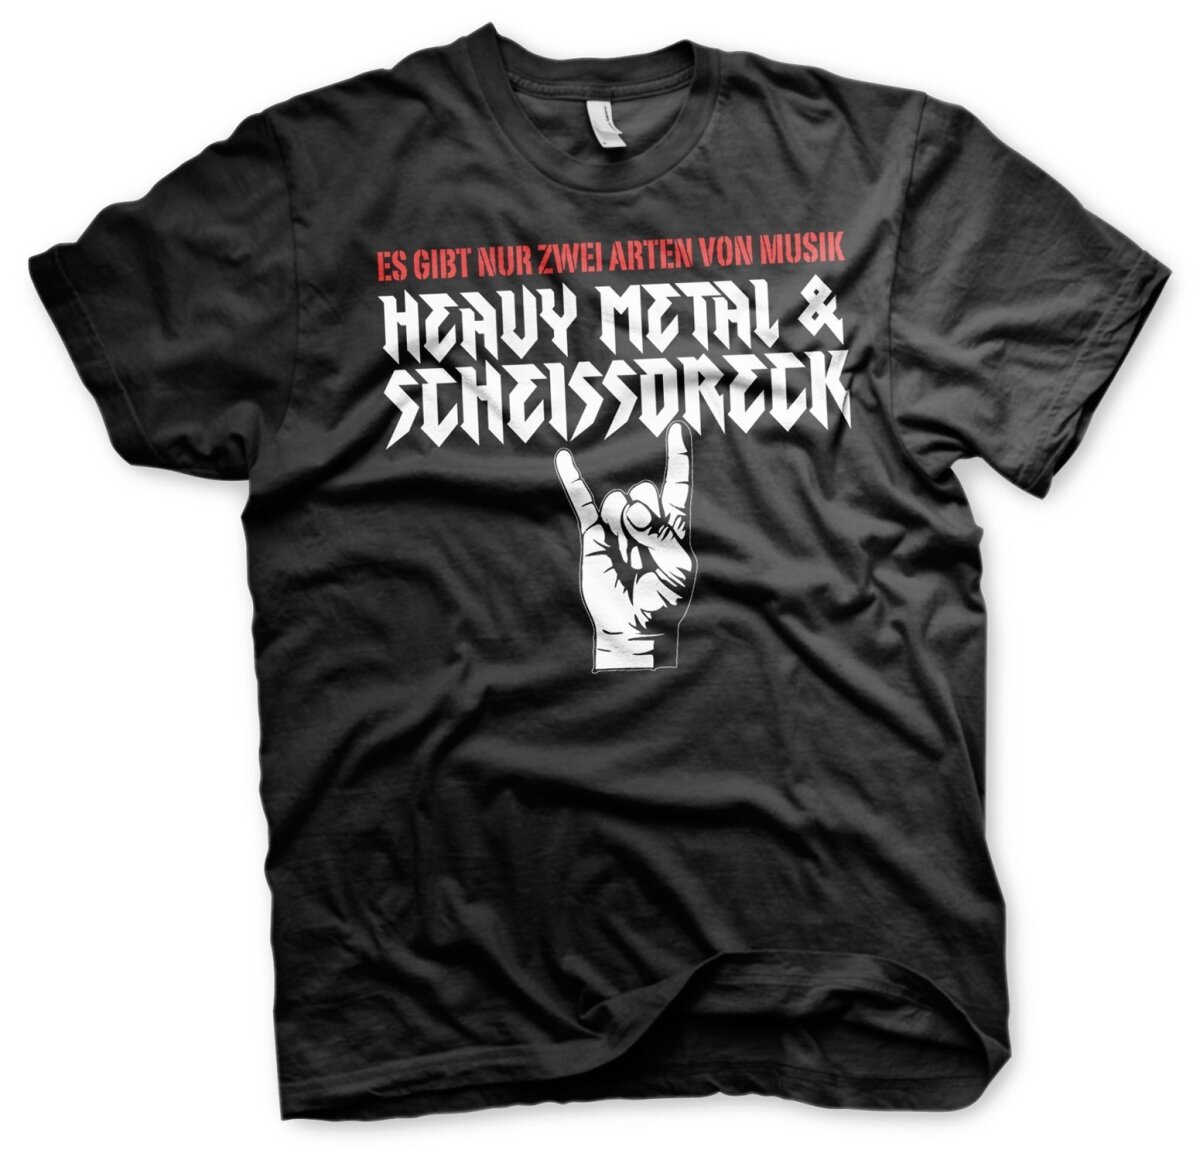 Heavy Metal & Scheissdreck - TShirt Rock Biker Rocker - Wikingerv, 16,90 €